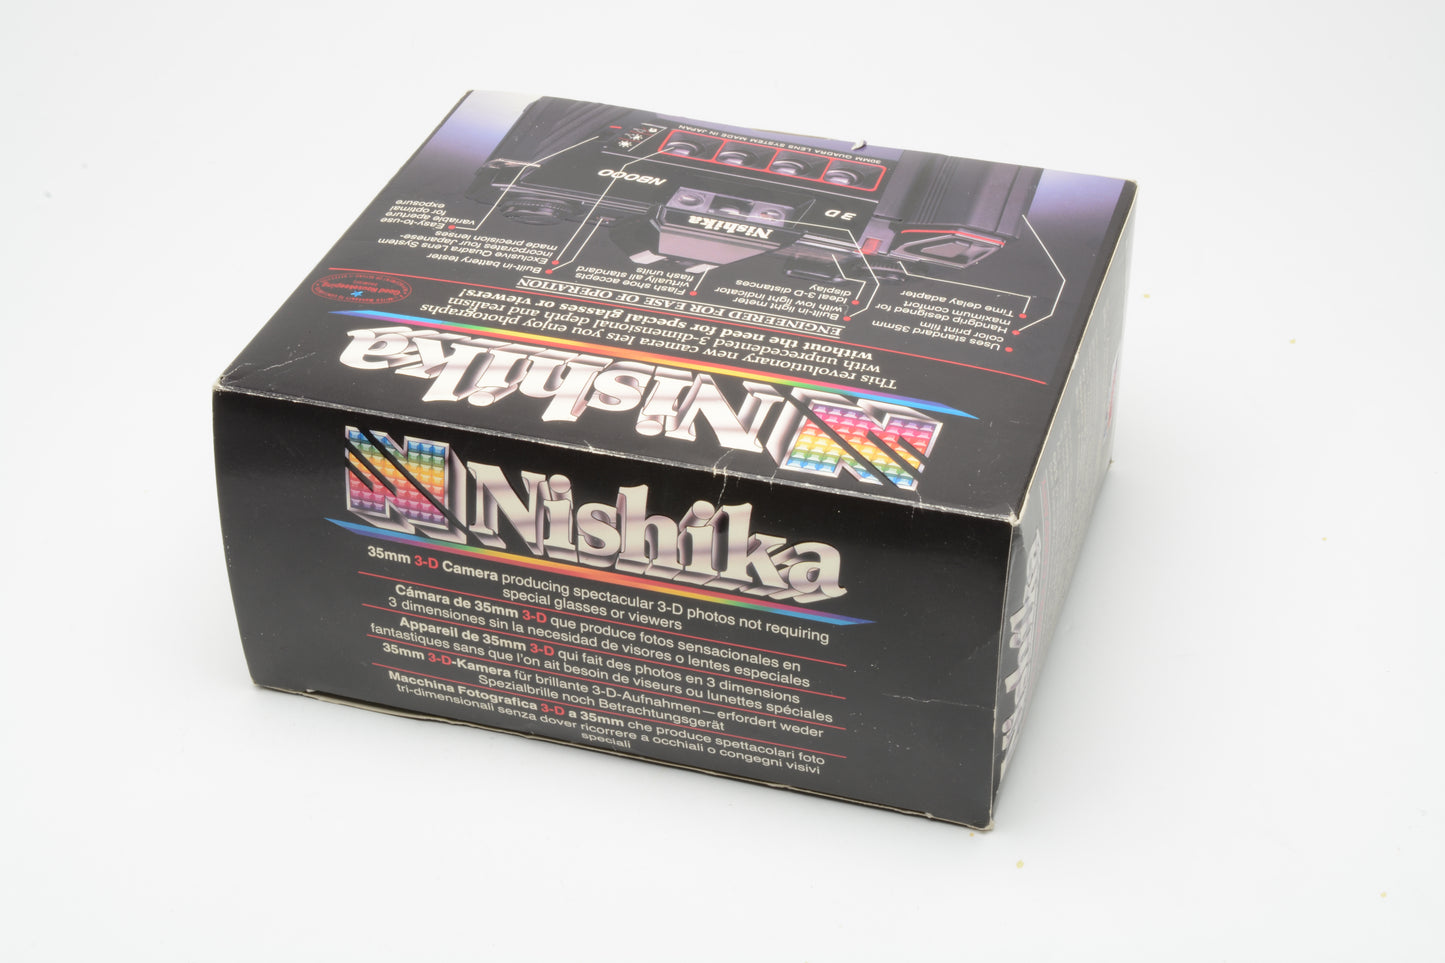 Nishika N8000 3D Camera w/30mm Quadra Lens, NIB - Never used